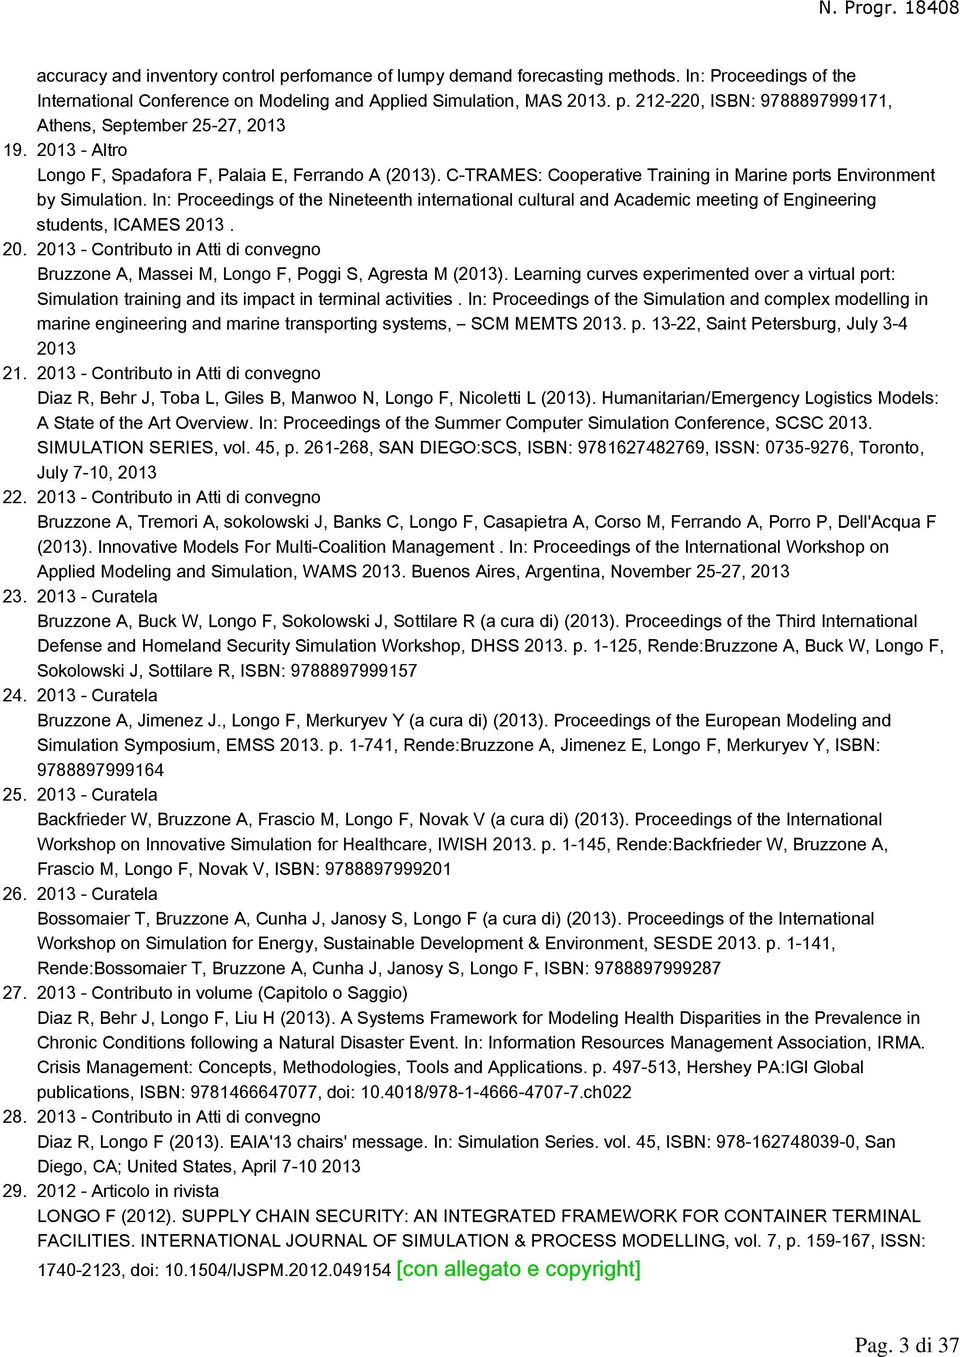 212-220, ISBN: 9788897999171, Athens, September 25-27, 2013 2013 - Altro Longo F, Spadafora F, Palaia E, Ferrando A (2013). C-TRAMES: Cooperative Training in Marine ports Environment by Simulation.